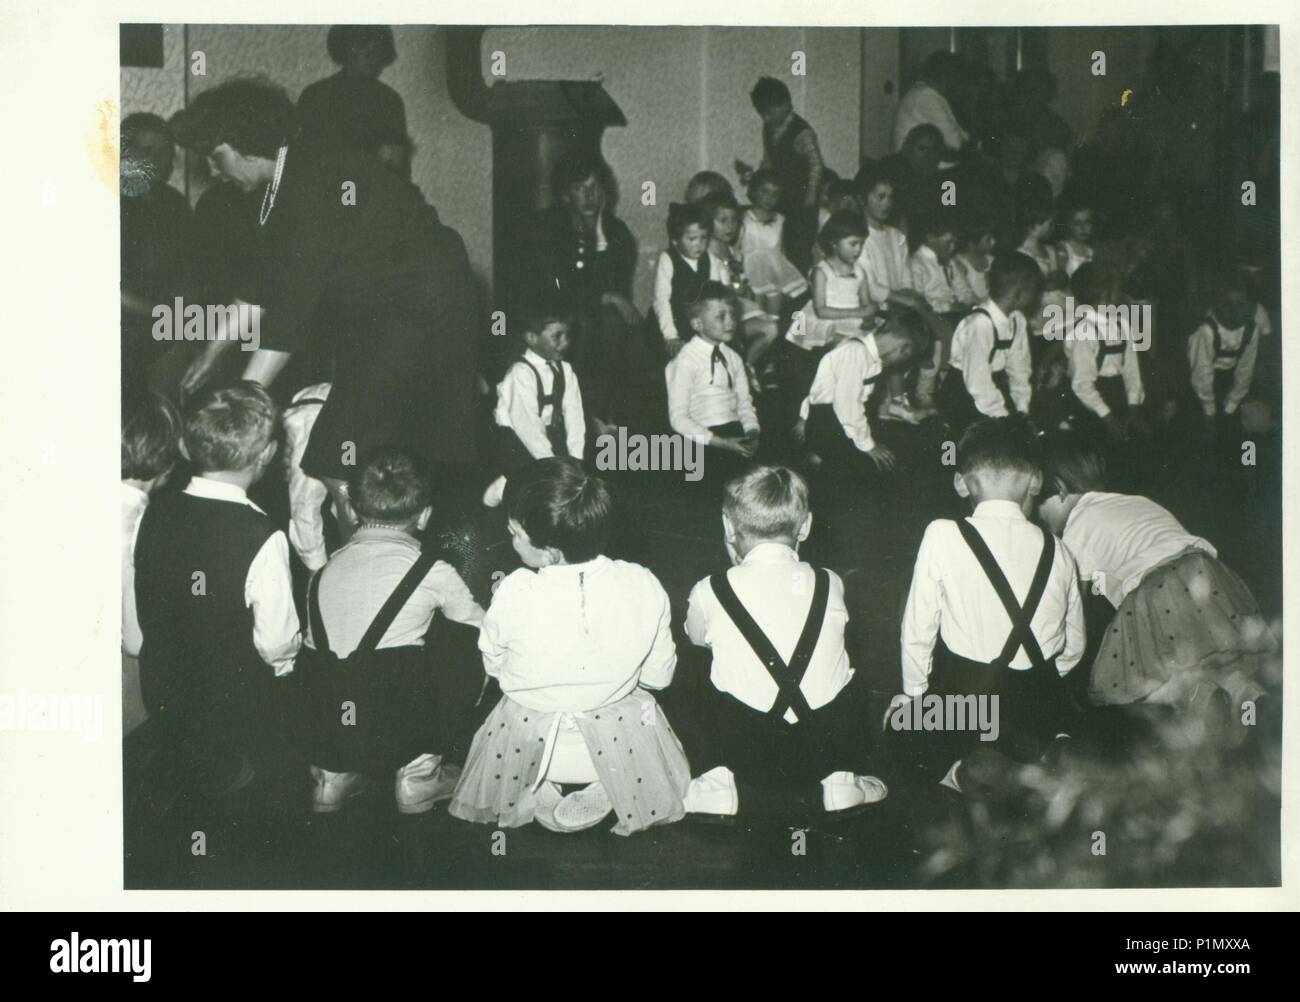 THE CZECHOSLOVAK SOCIALIST REPUBLIC - CIRCA 1960s: Retro photo shows small pupils in the classroom.  Vintage black & white photography. Stock Photo